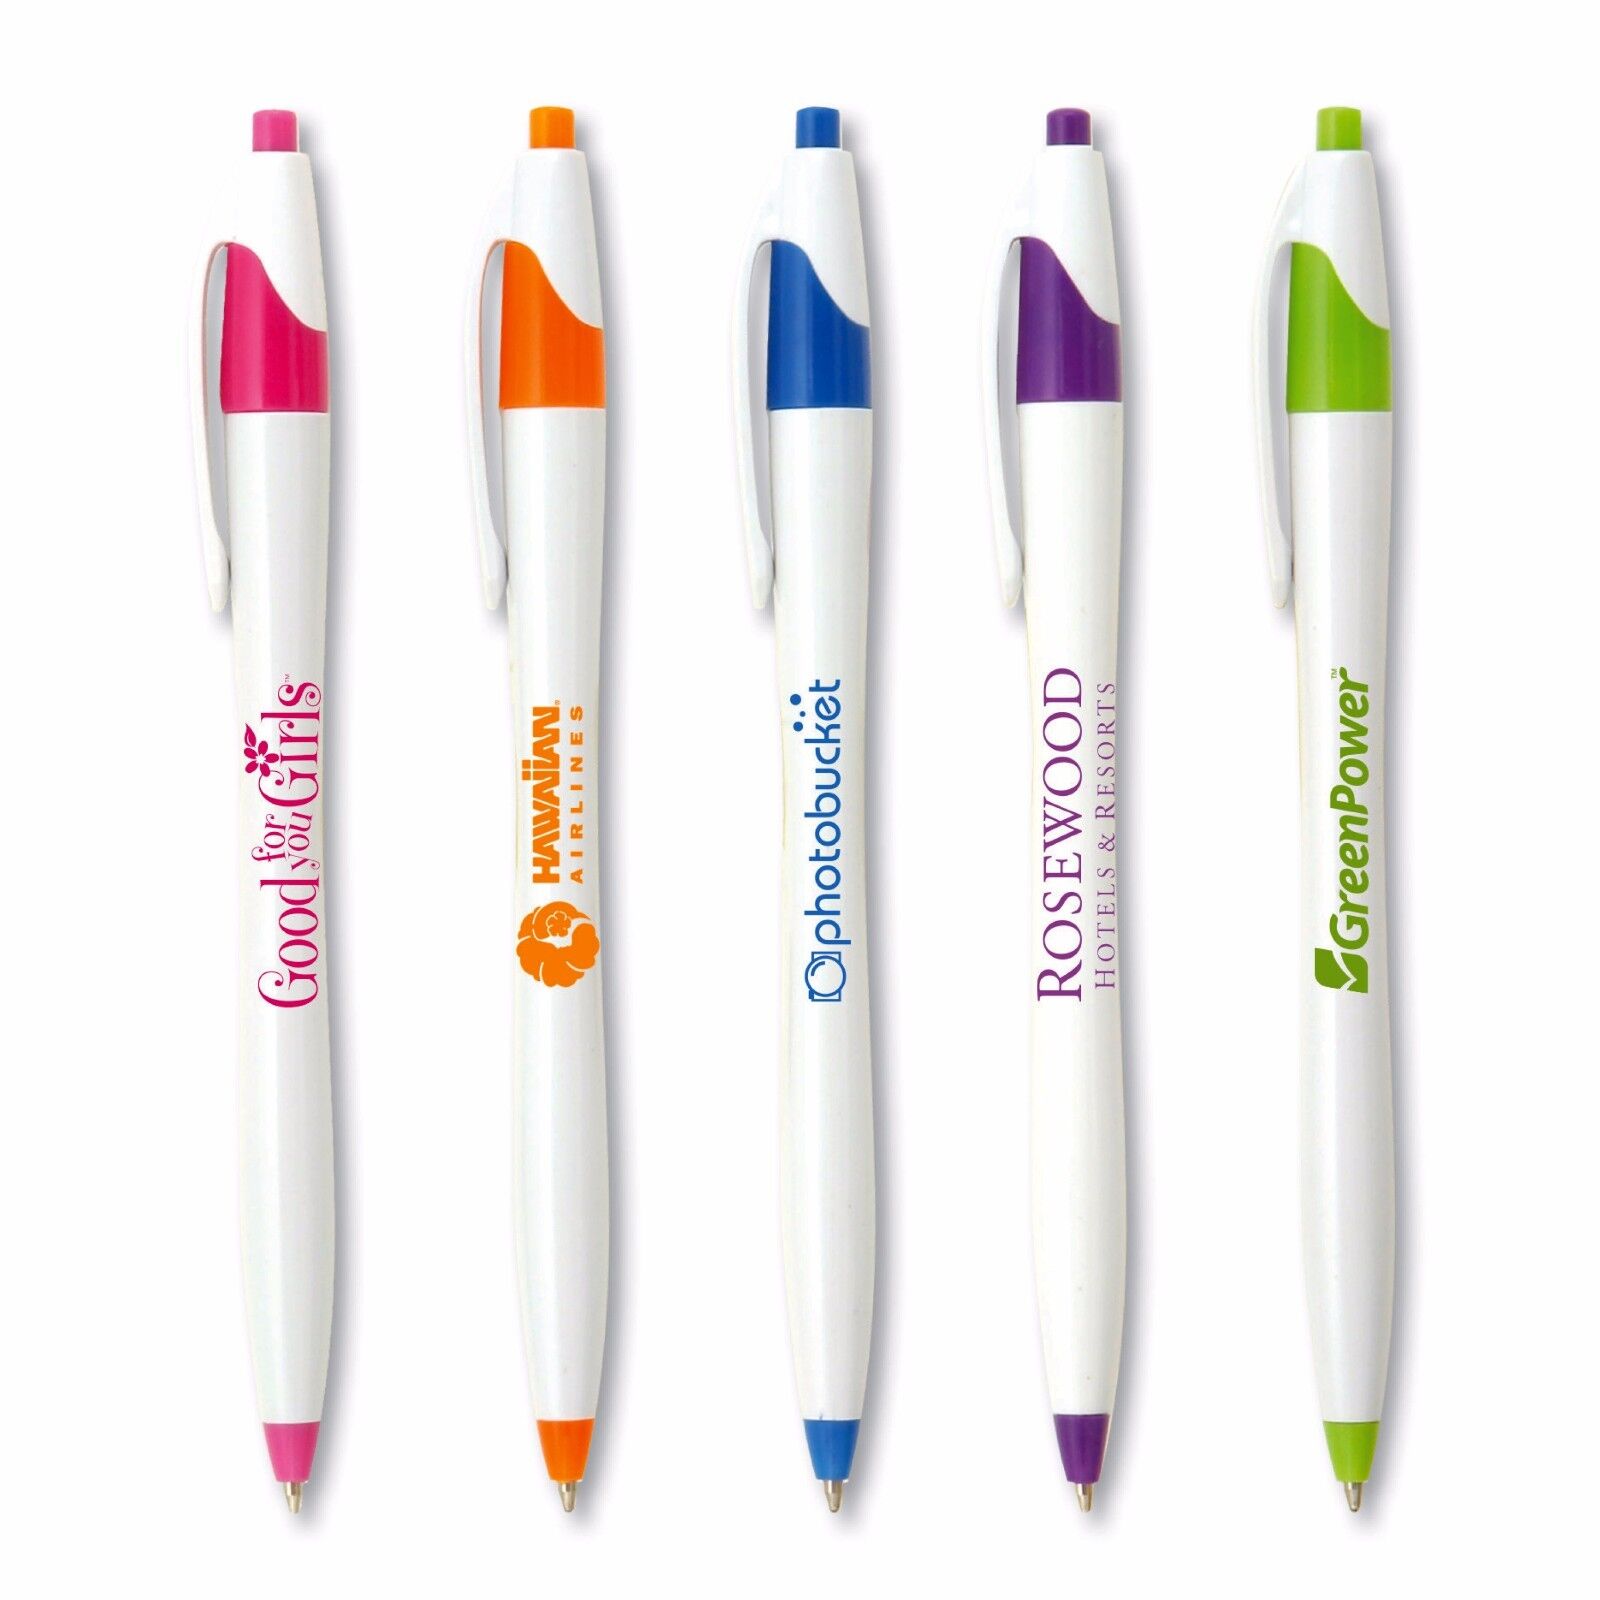 300- Promotional Pens - Personalized Custom Imprinted. Без бренда - фотография #2